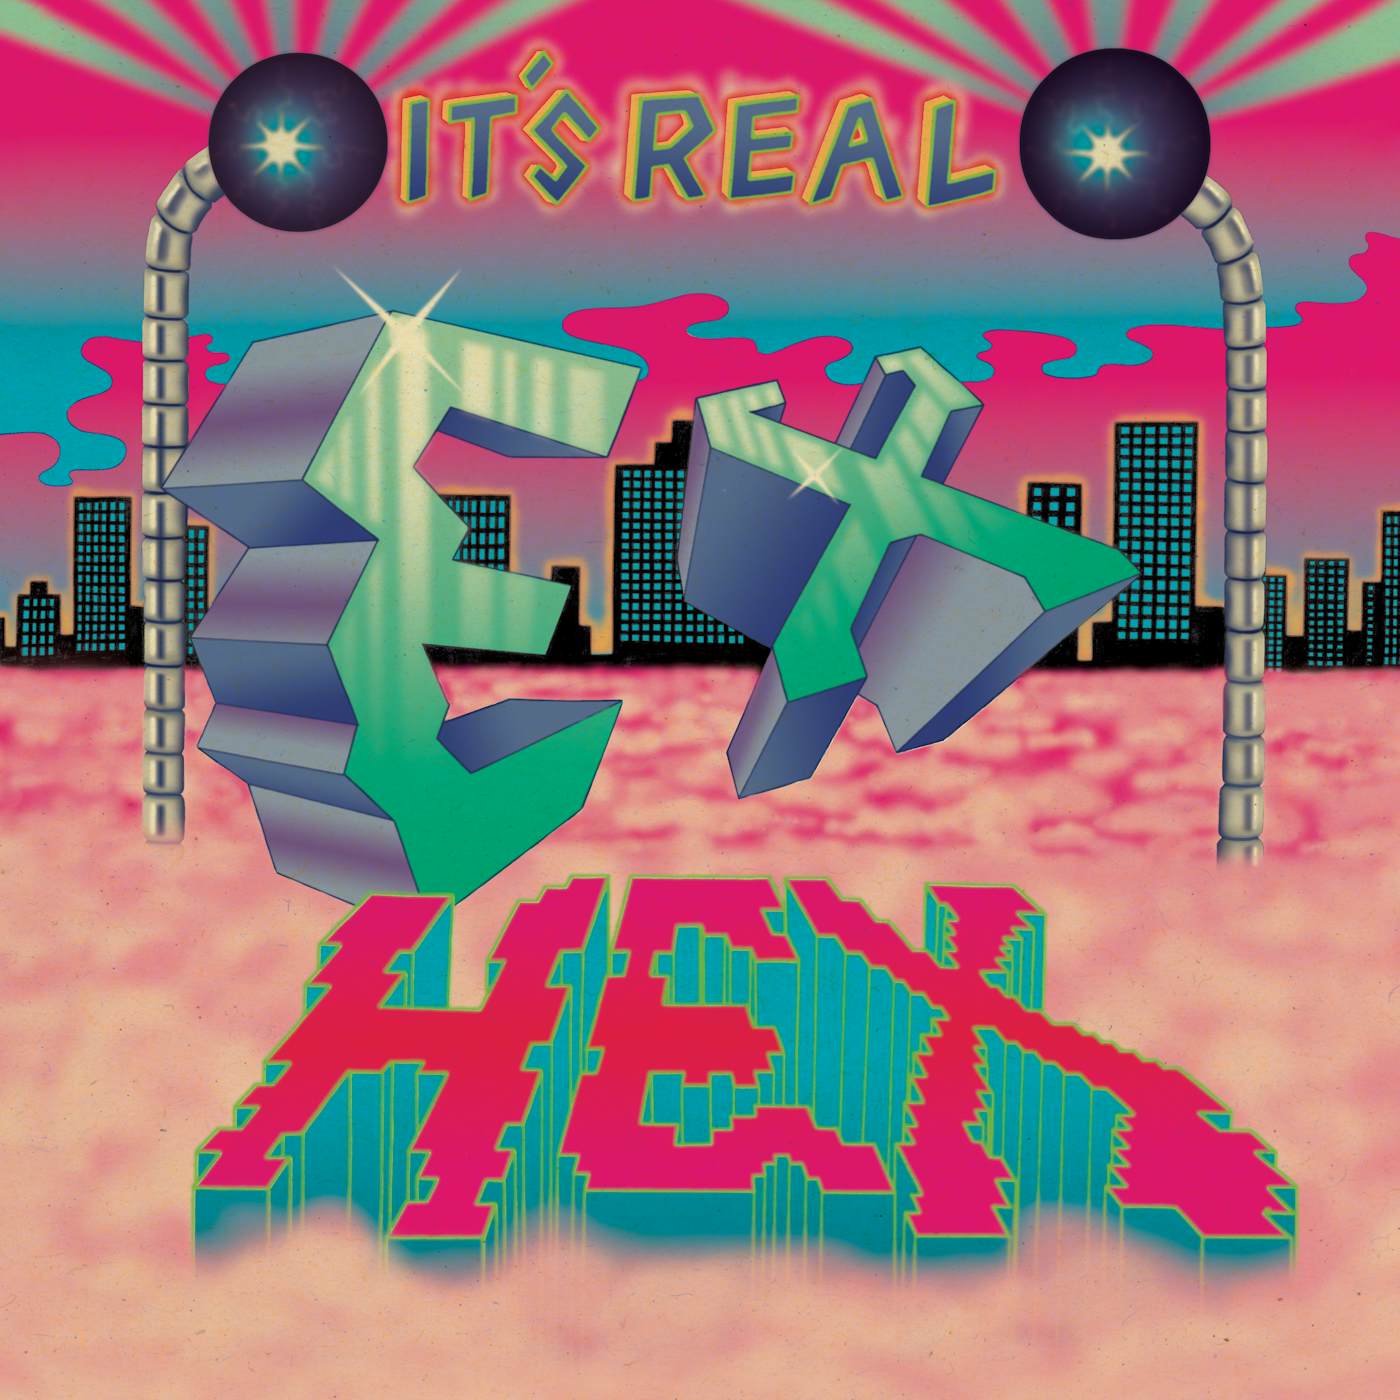 Ex Hex It's Real Vinyl Record